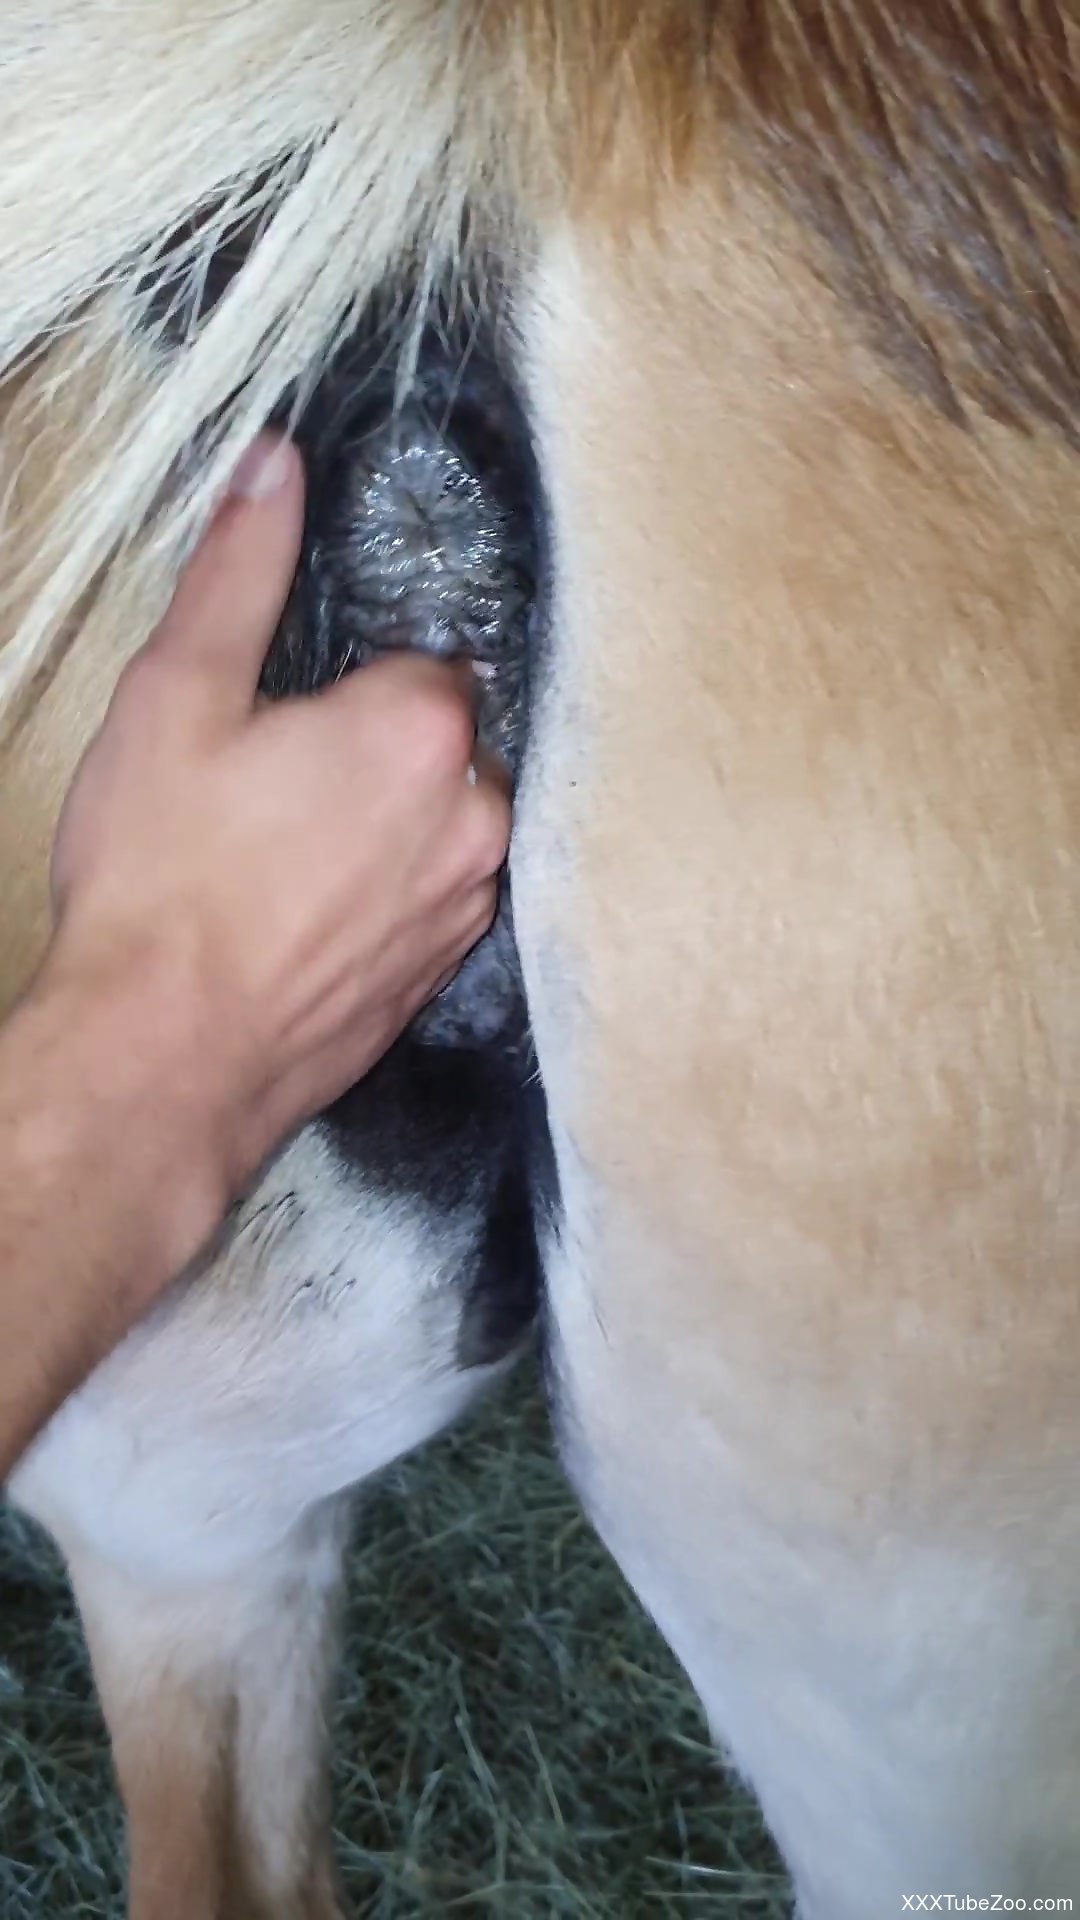 Fingering a horse